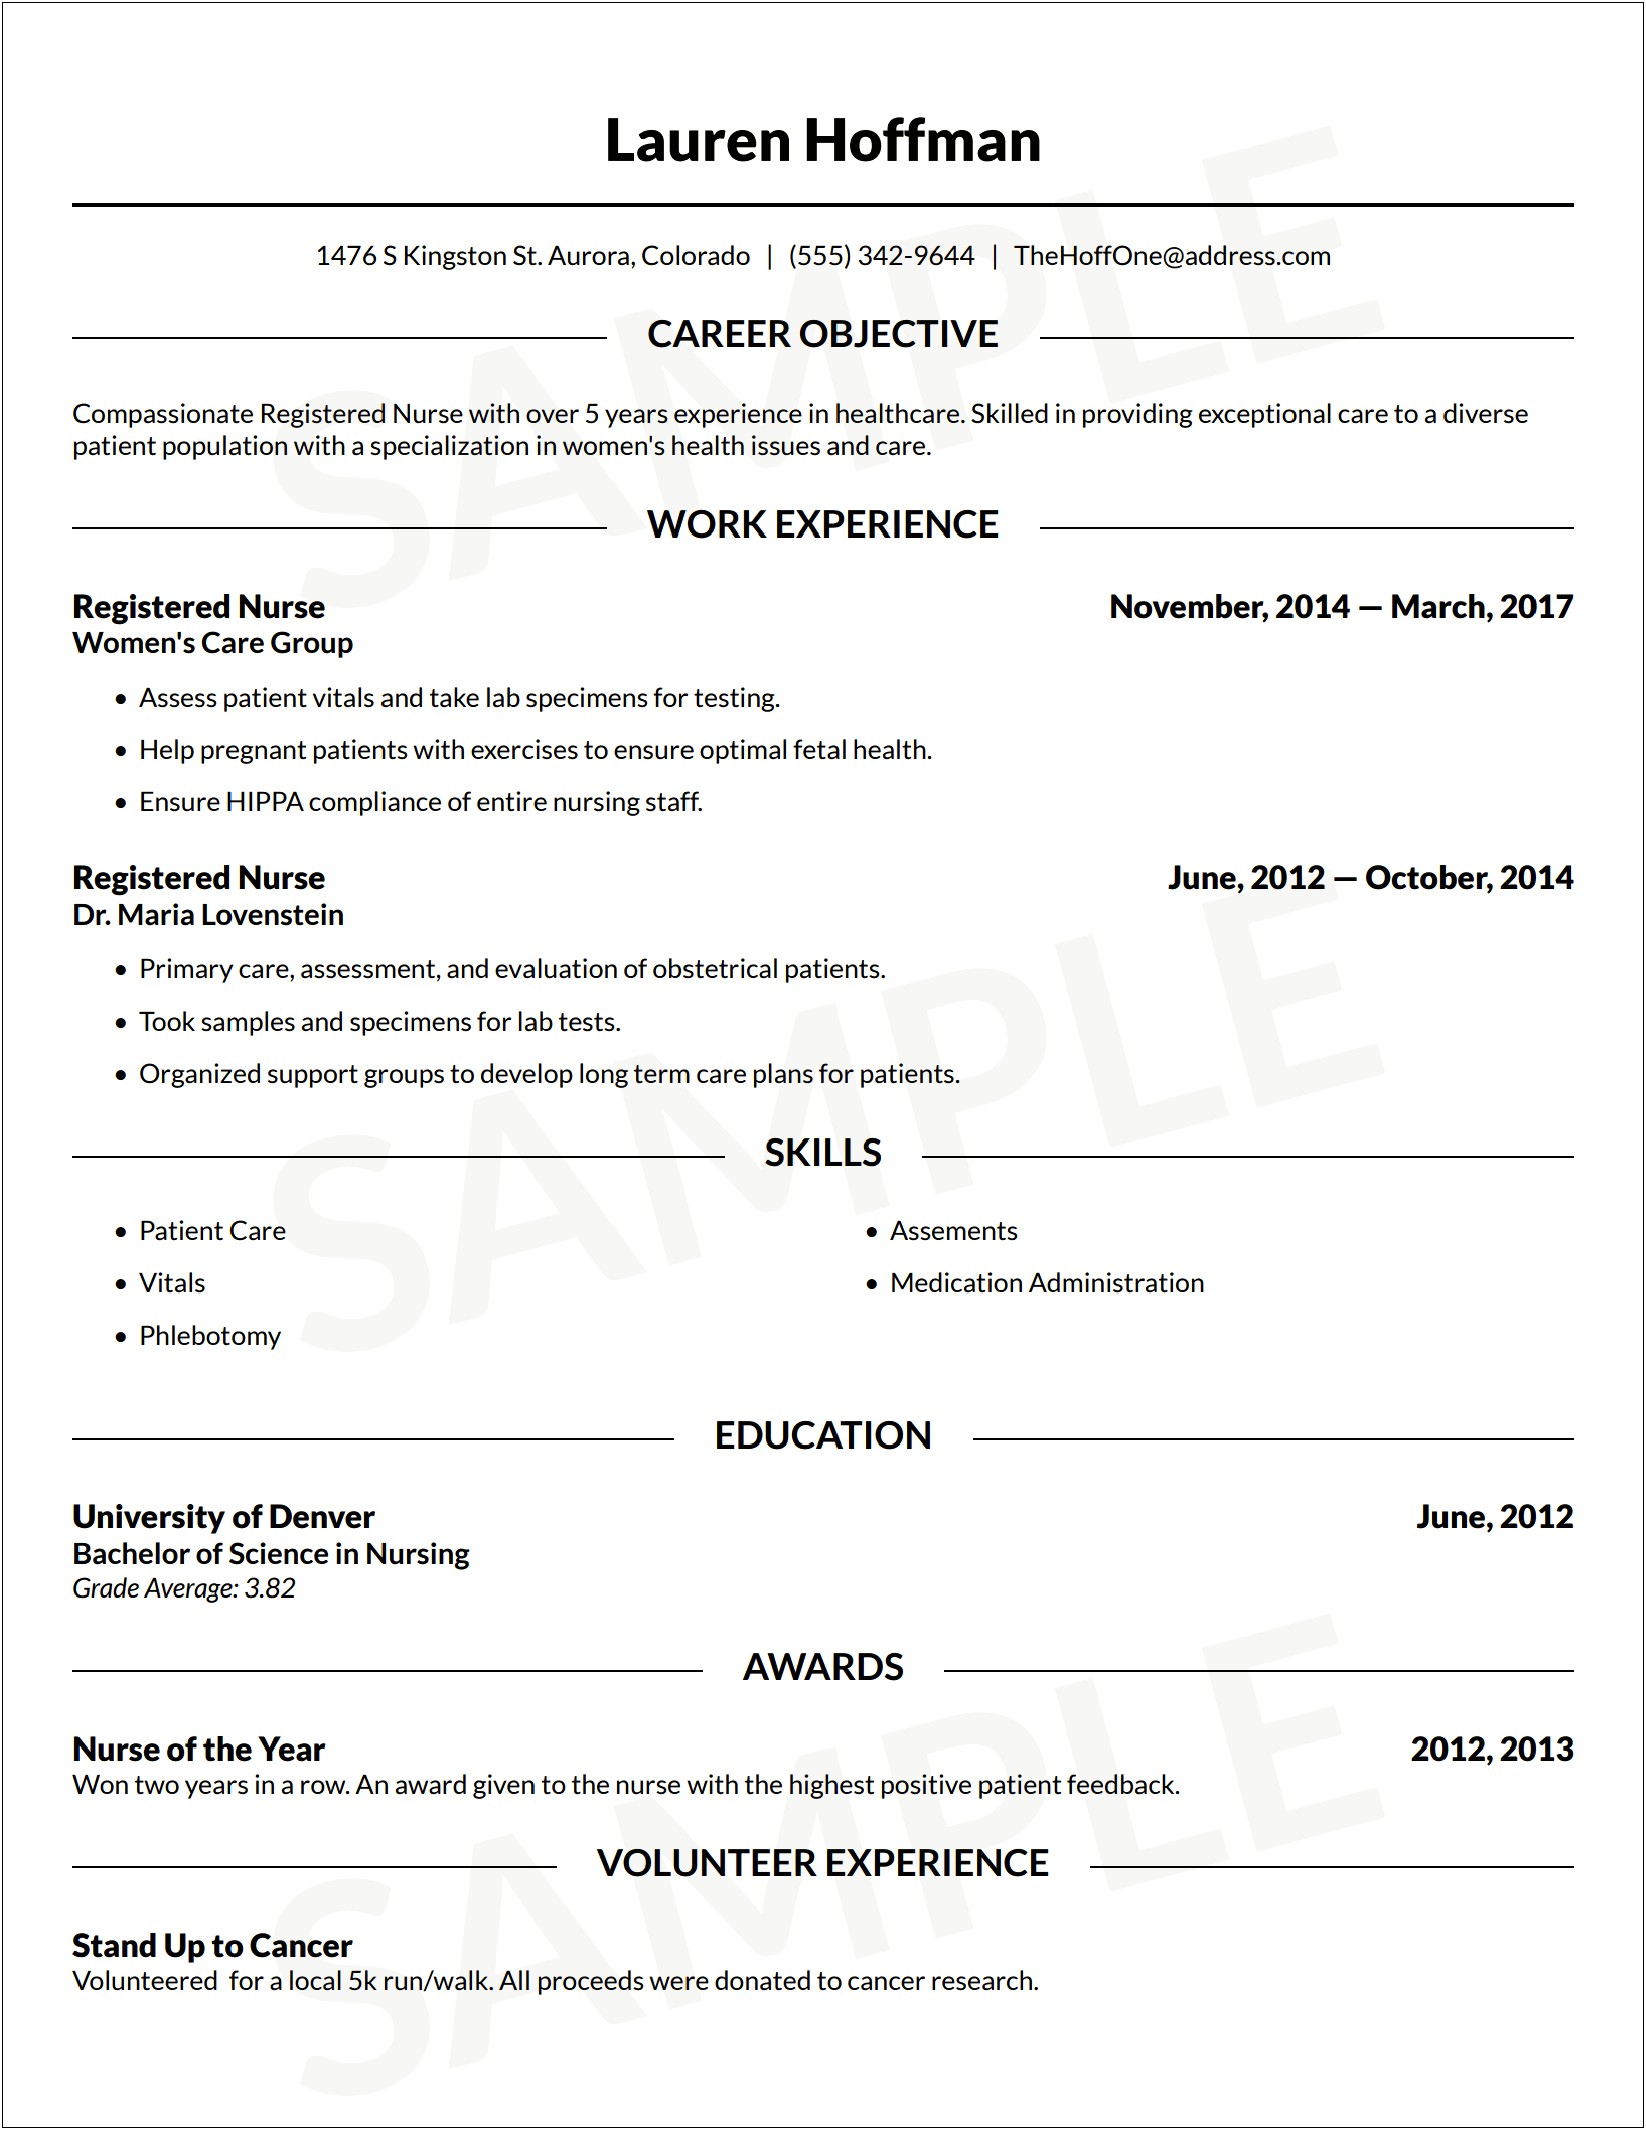 Free Resume Templates Canada 2012